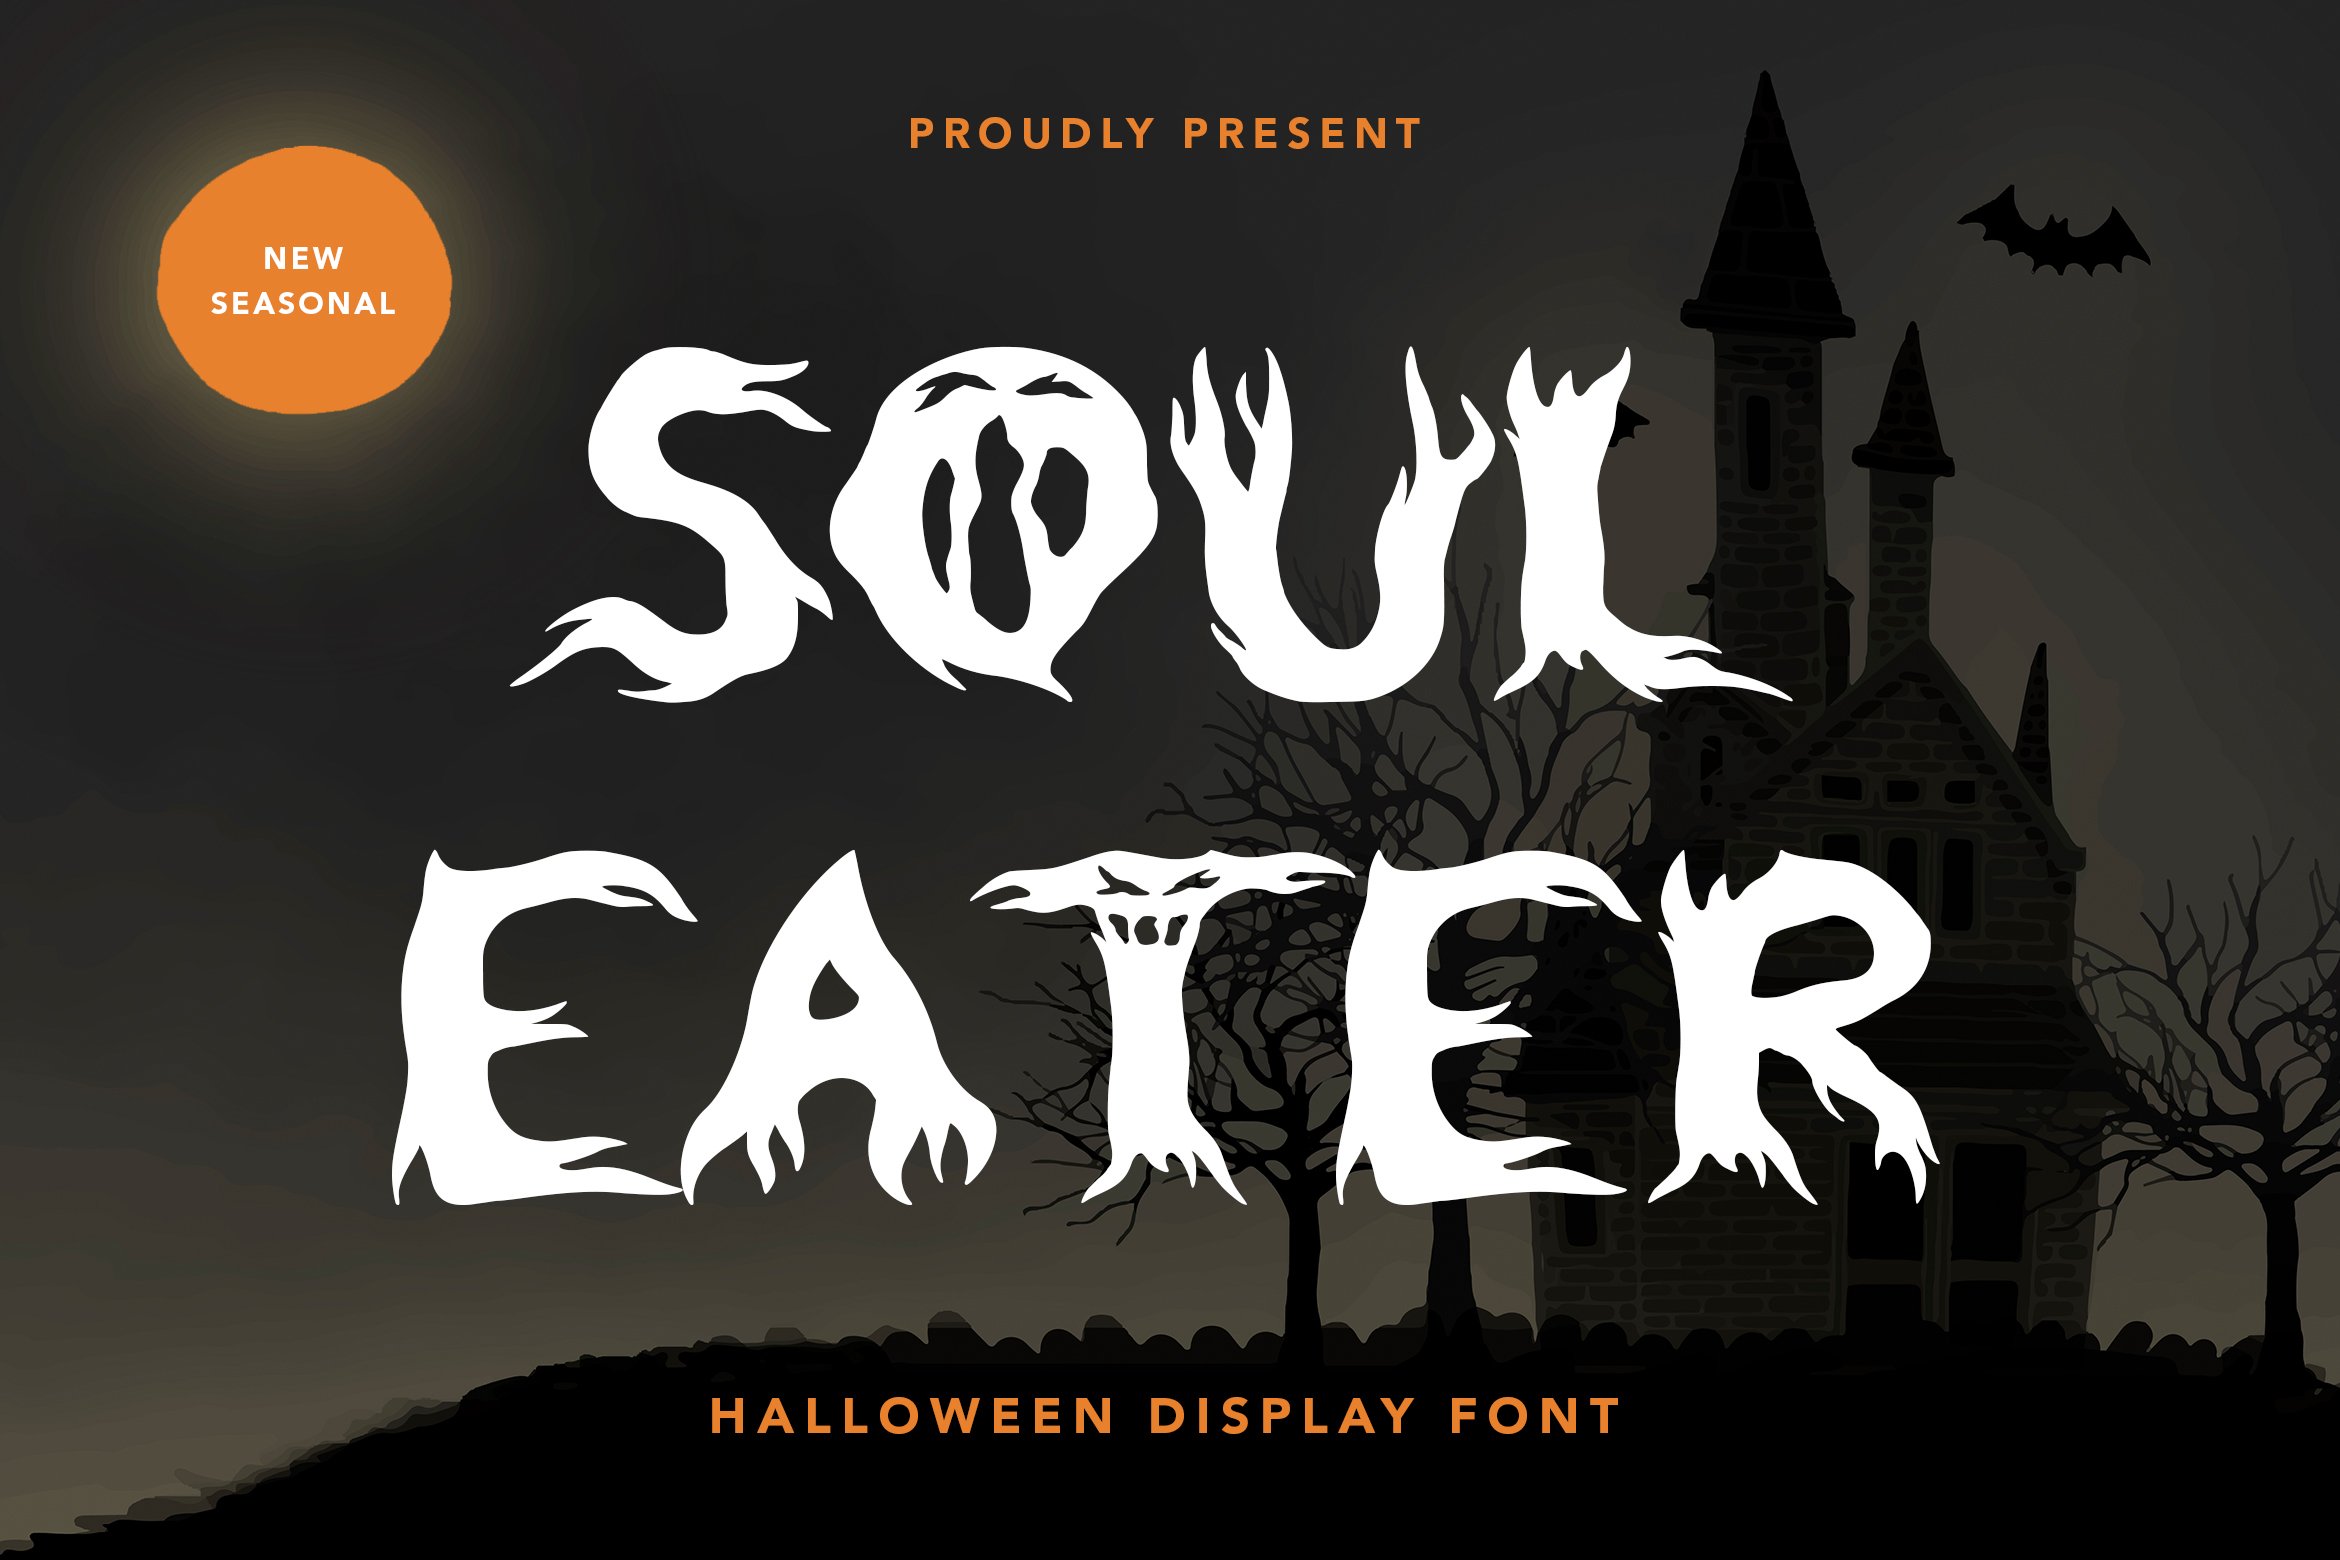 Soul Eater Postcards for Sale